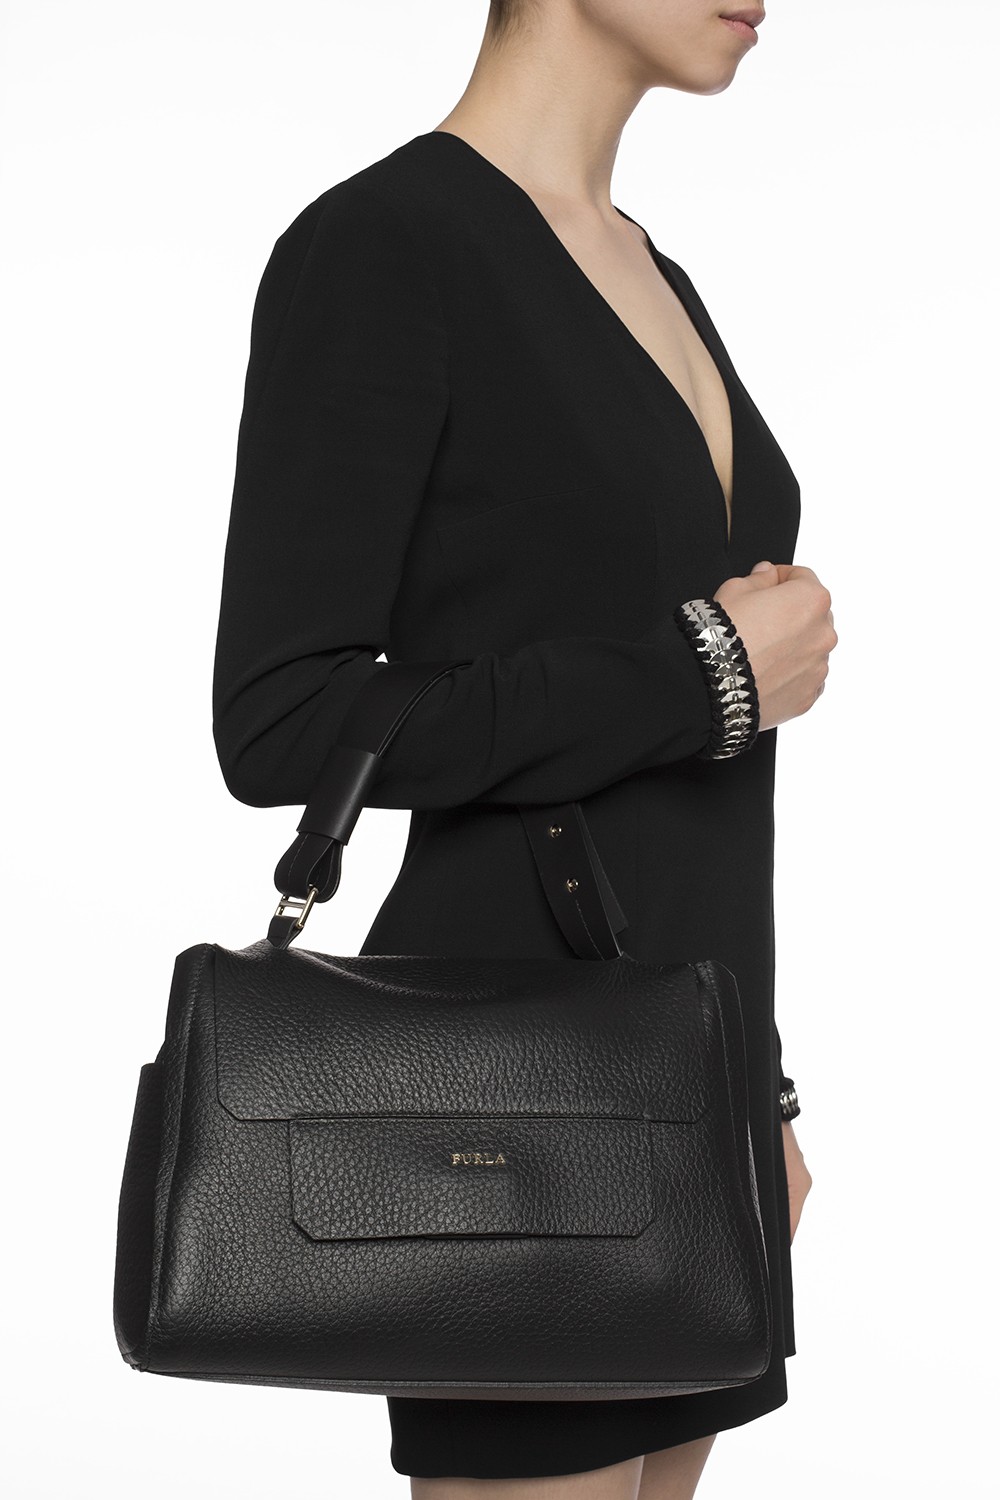 FURLA Capriccio Leather Tote Bag Luxury Purse Handbag 661678 Pink NEW